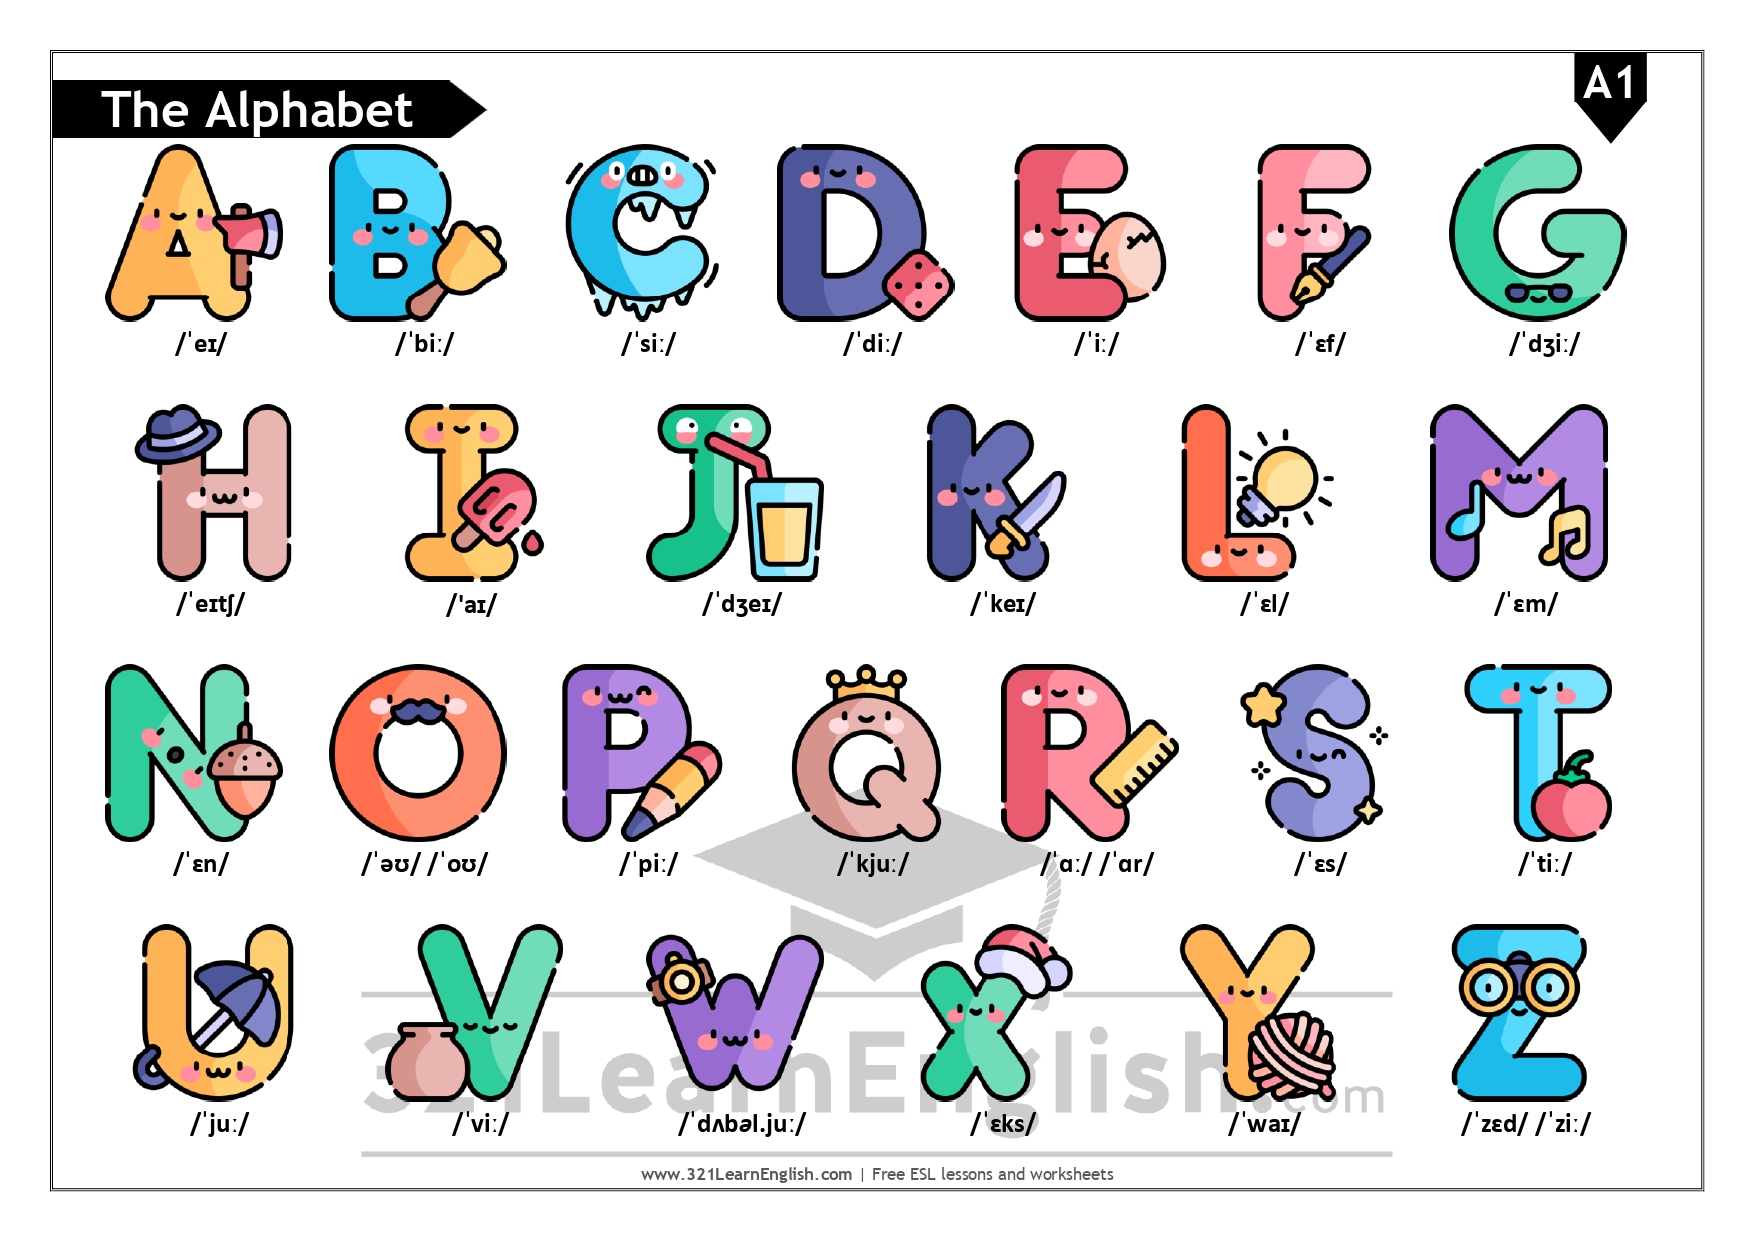 English Alphabet Pronunciation  English Alphabet for Beginners